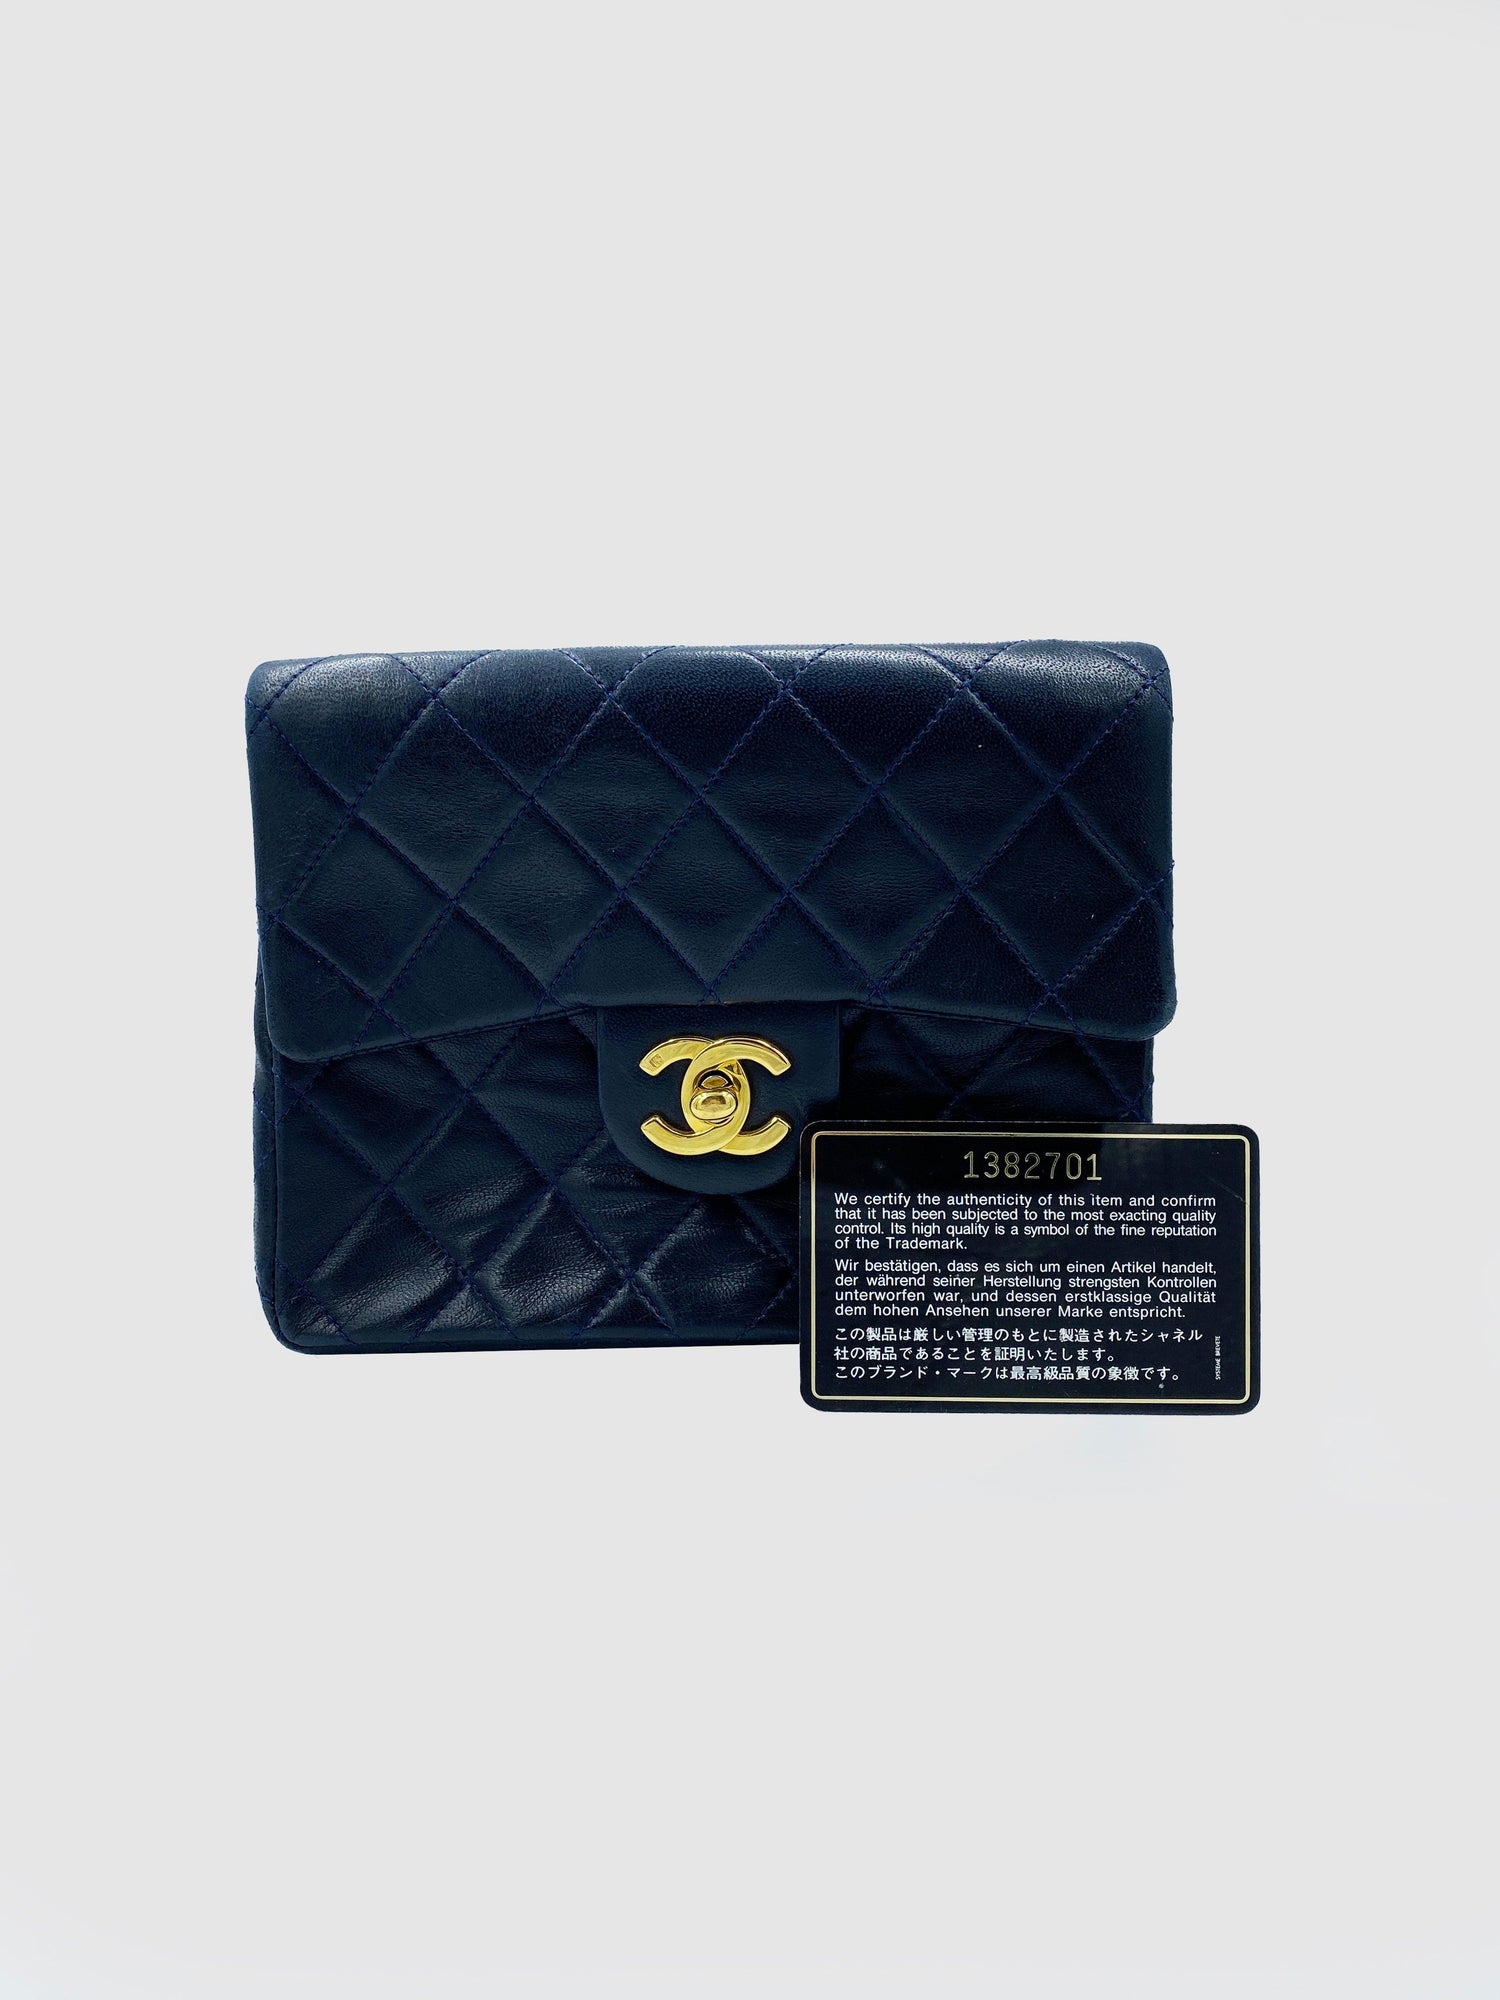 Chanel "Mini Classic Square Flap" - Second Nature Boutique